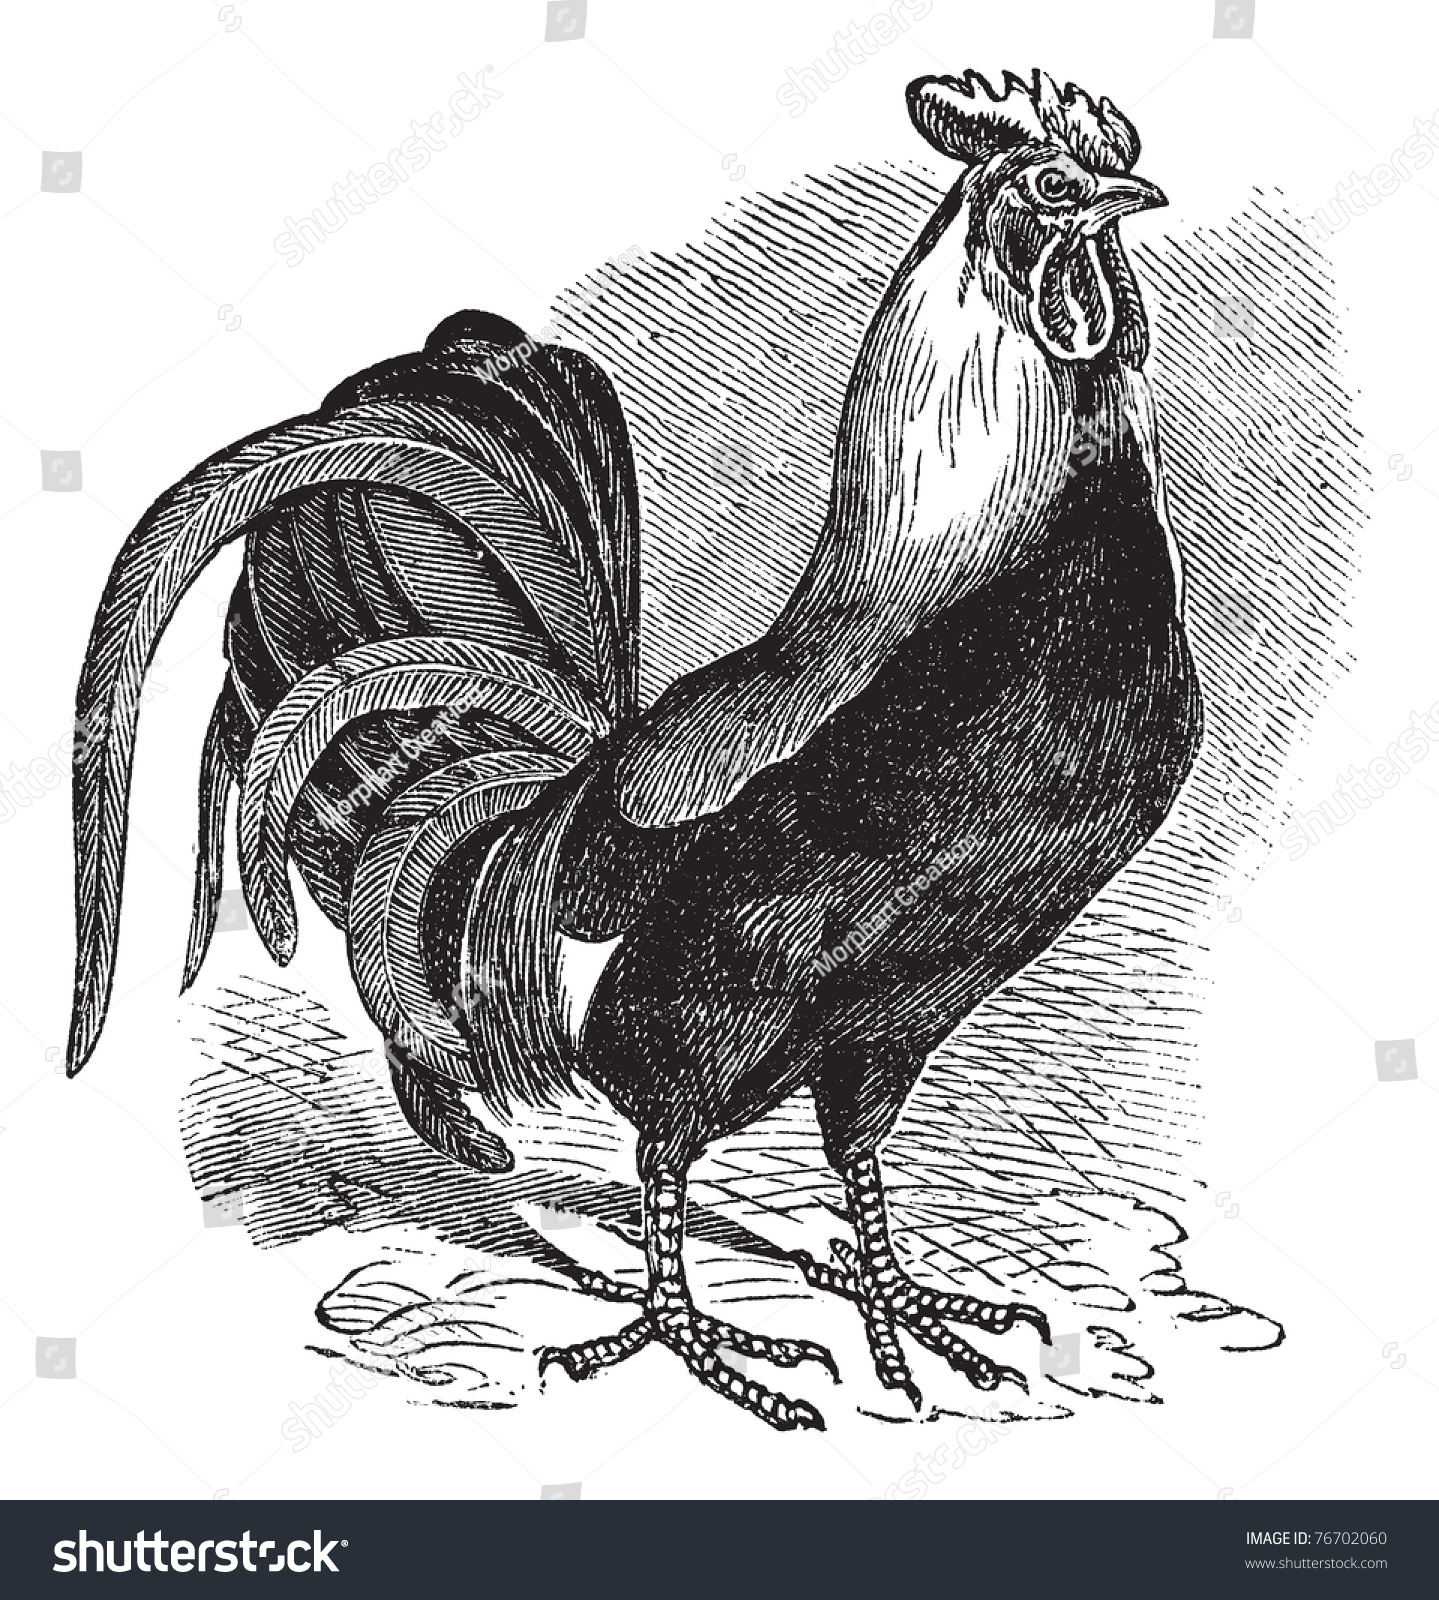 SVG of Rooster or Cockerel or Cock or Gallus gallus, vintage engraving. Old engraved illustration of Rooster. Trousset Encyclopedia svg